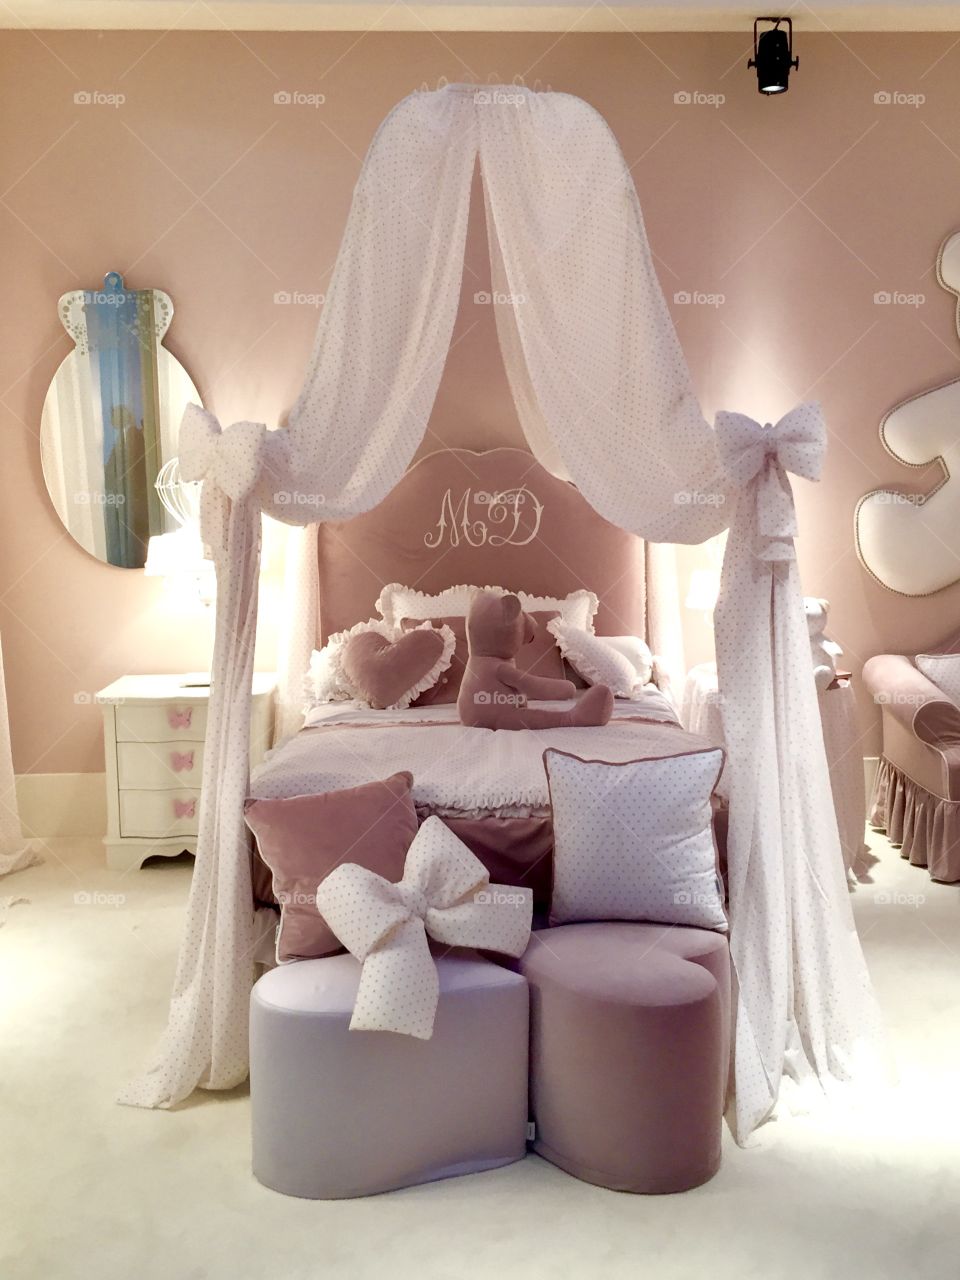 Baby girl's bedroom, princess style